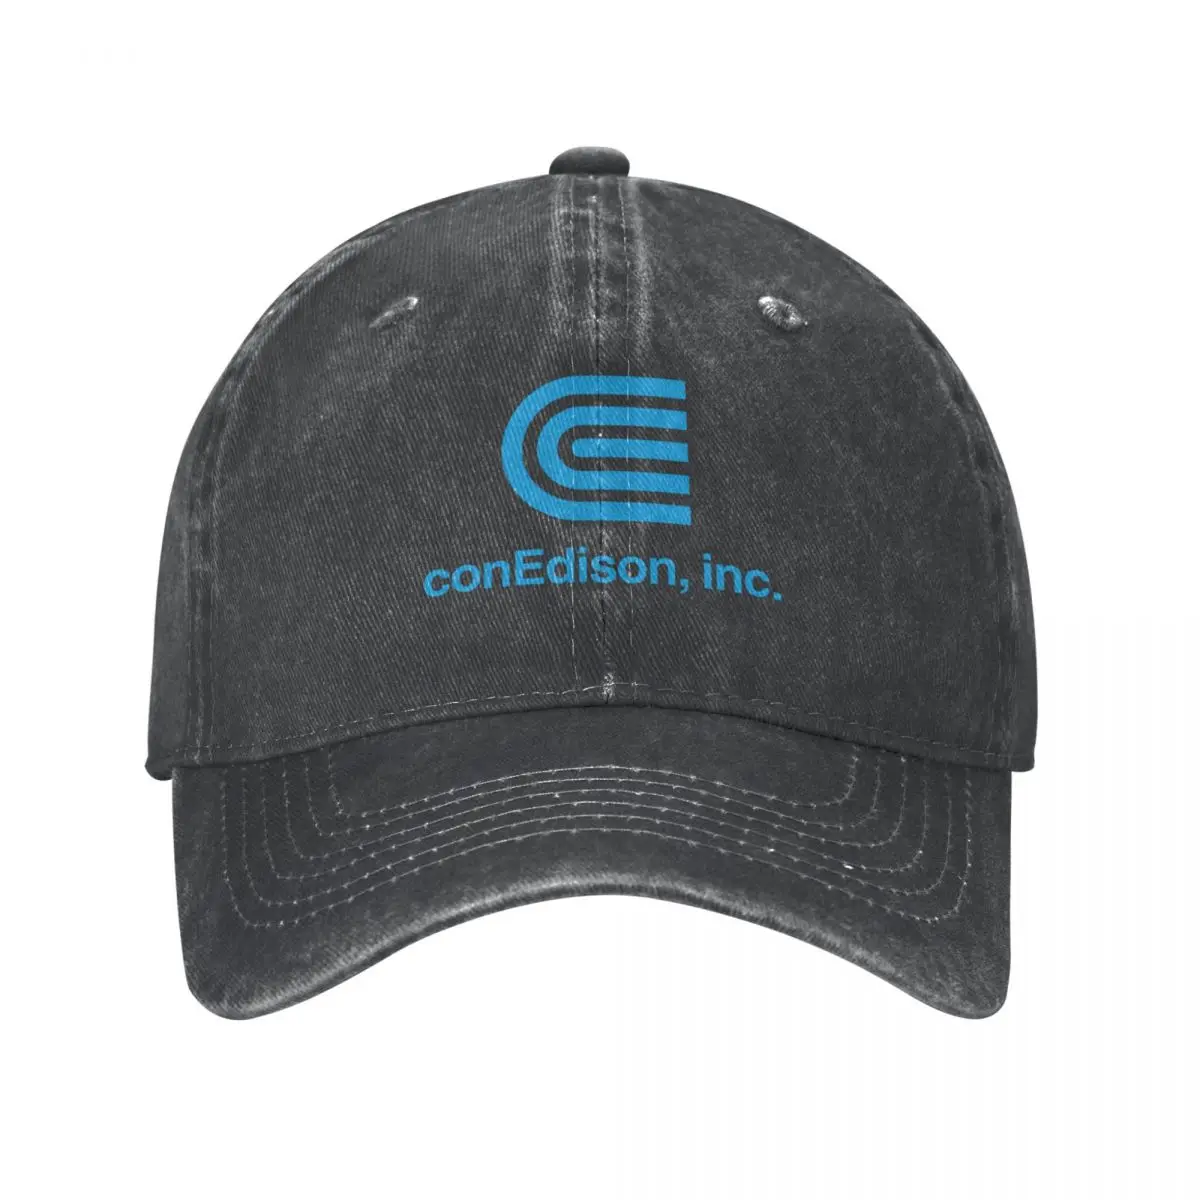 

CON EDISON - LOGO Cap Cowboy Hat Beach bag Brand man caps Beach outing golf hat hat for men Women's